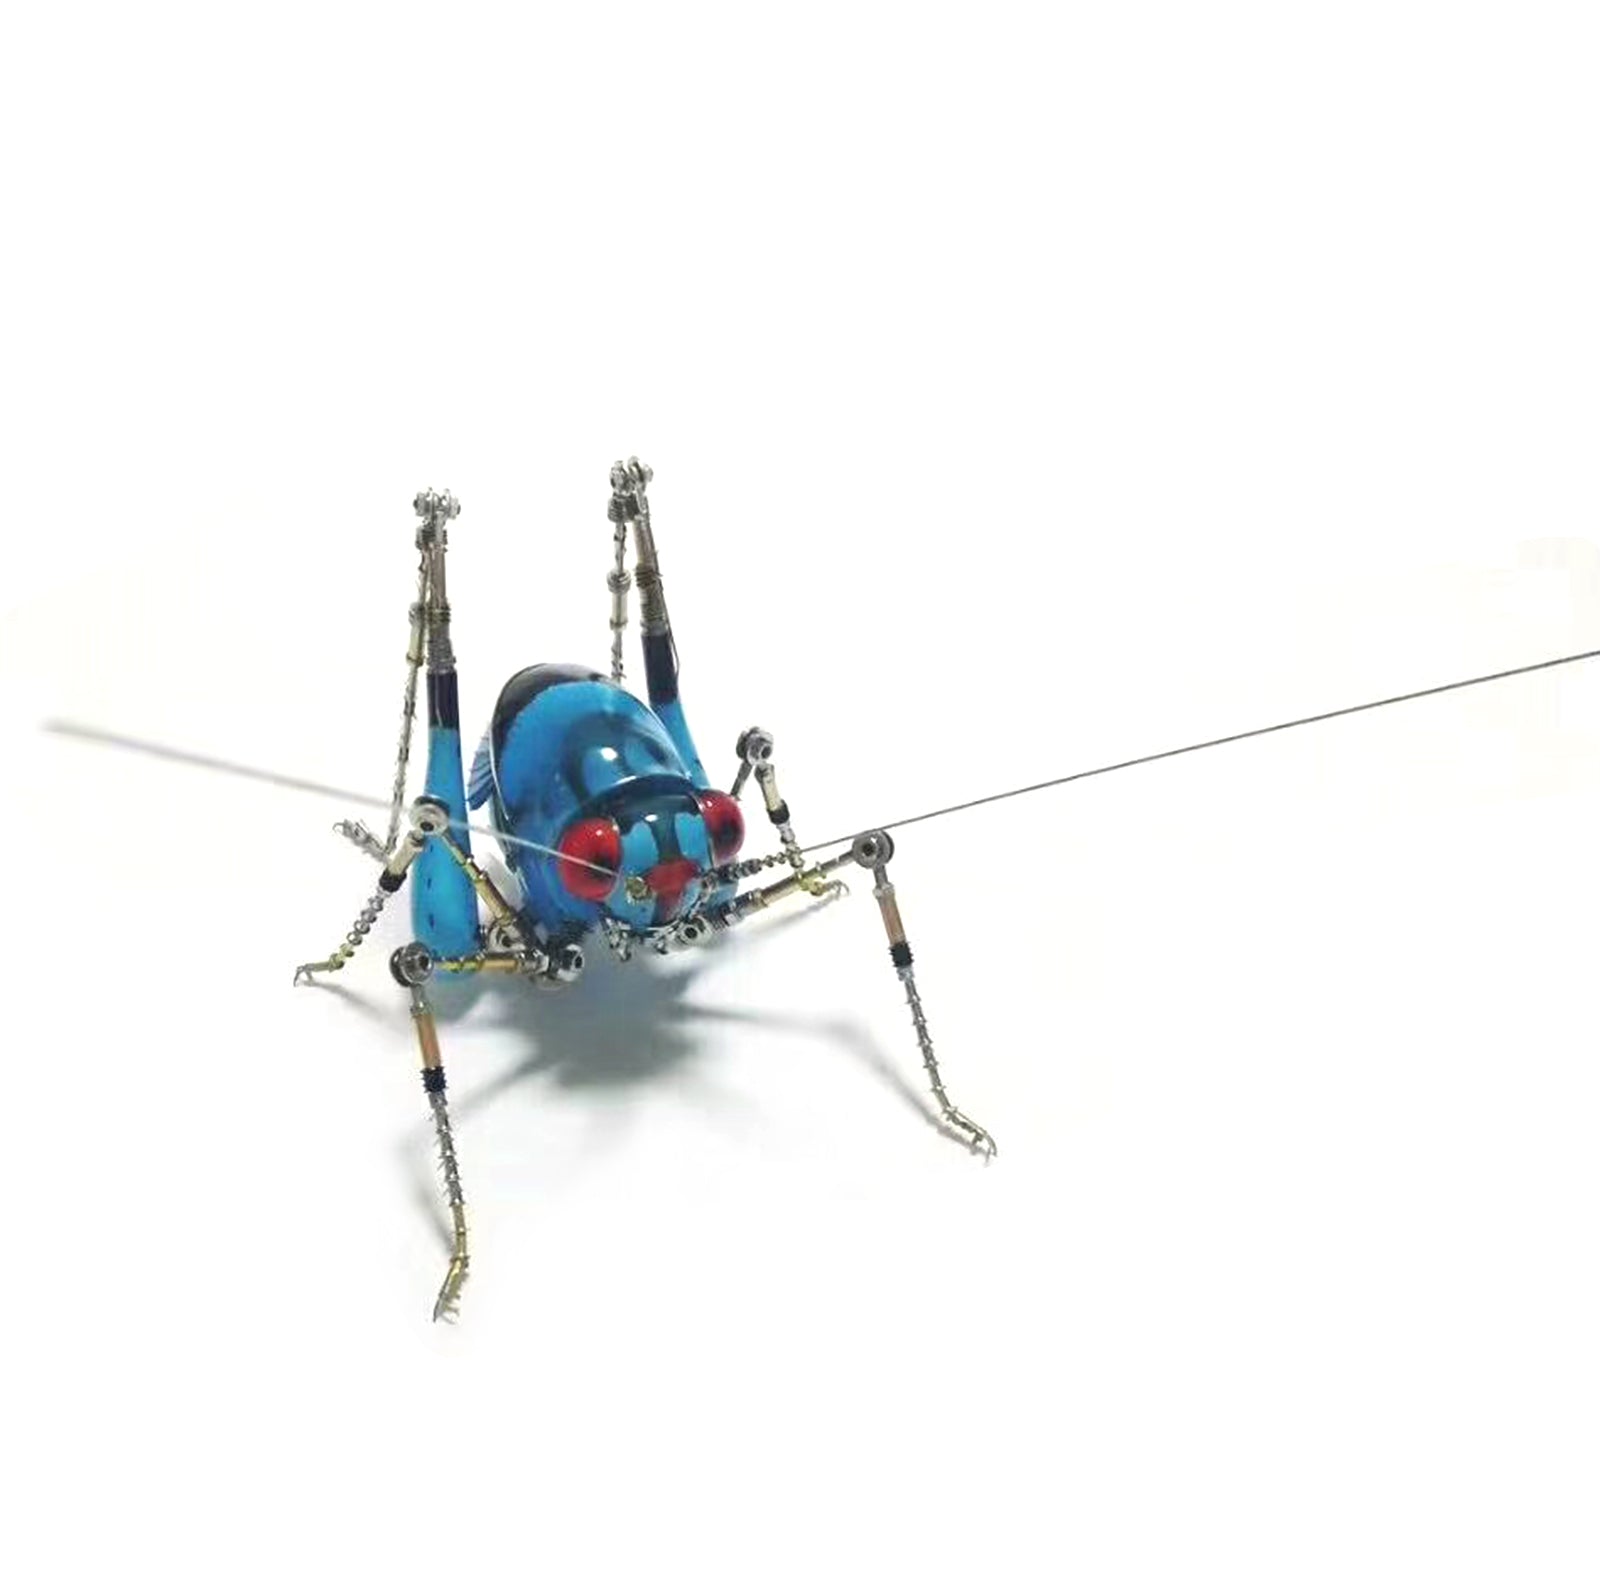 Steampunk Blue Grasshopper Model Sculpture Bug Insect 3D Metal Assembled Crafts